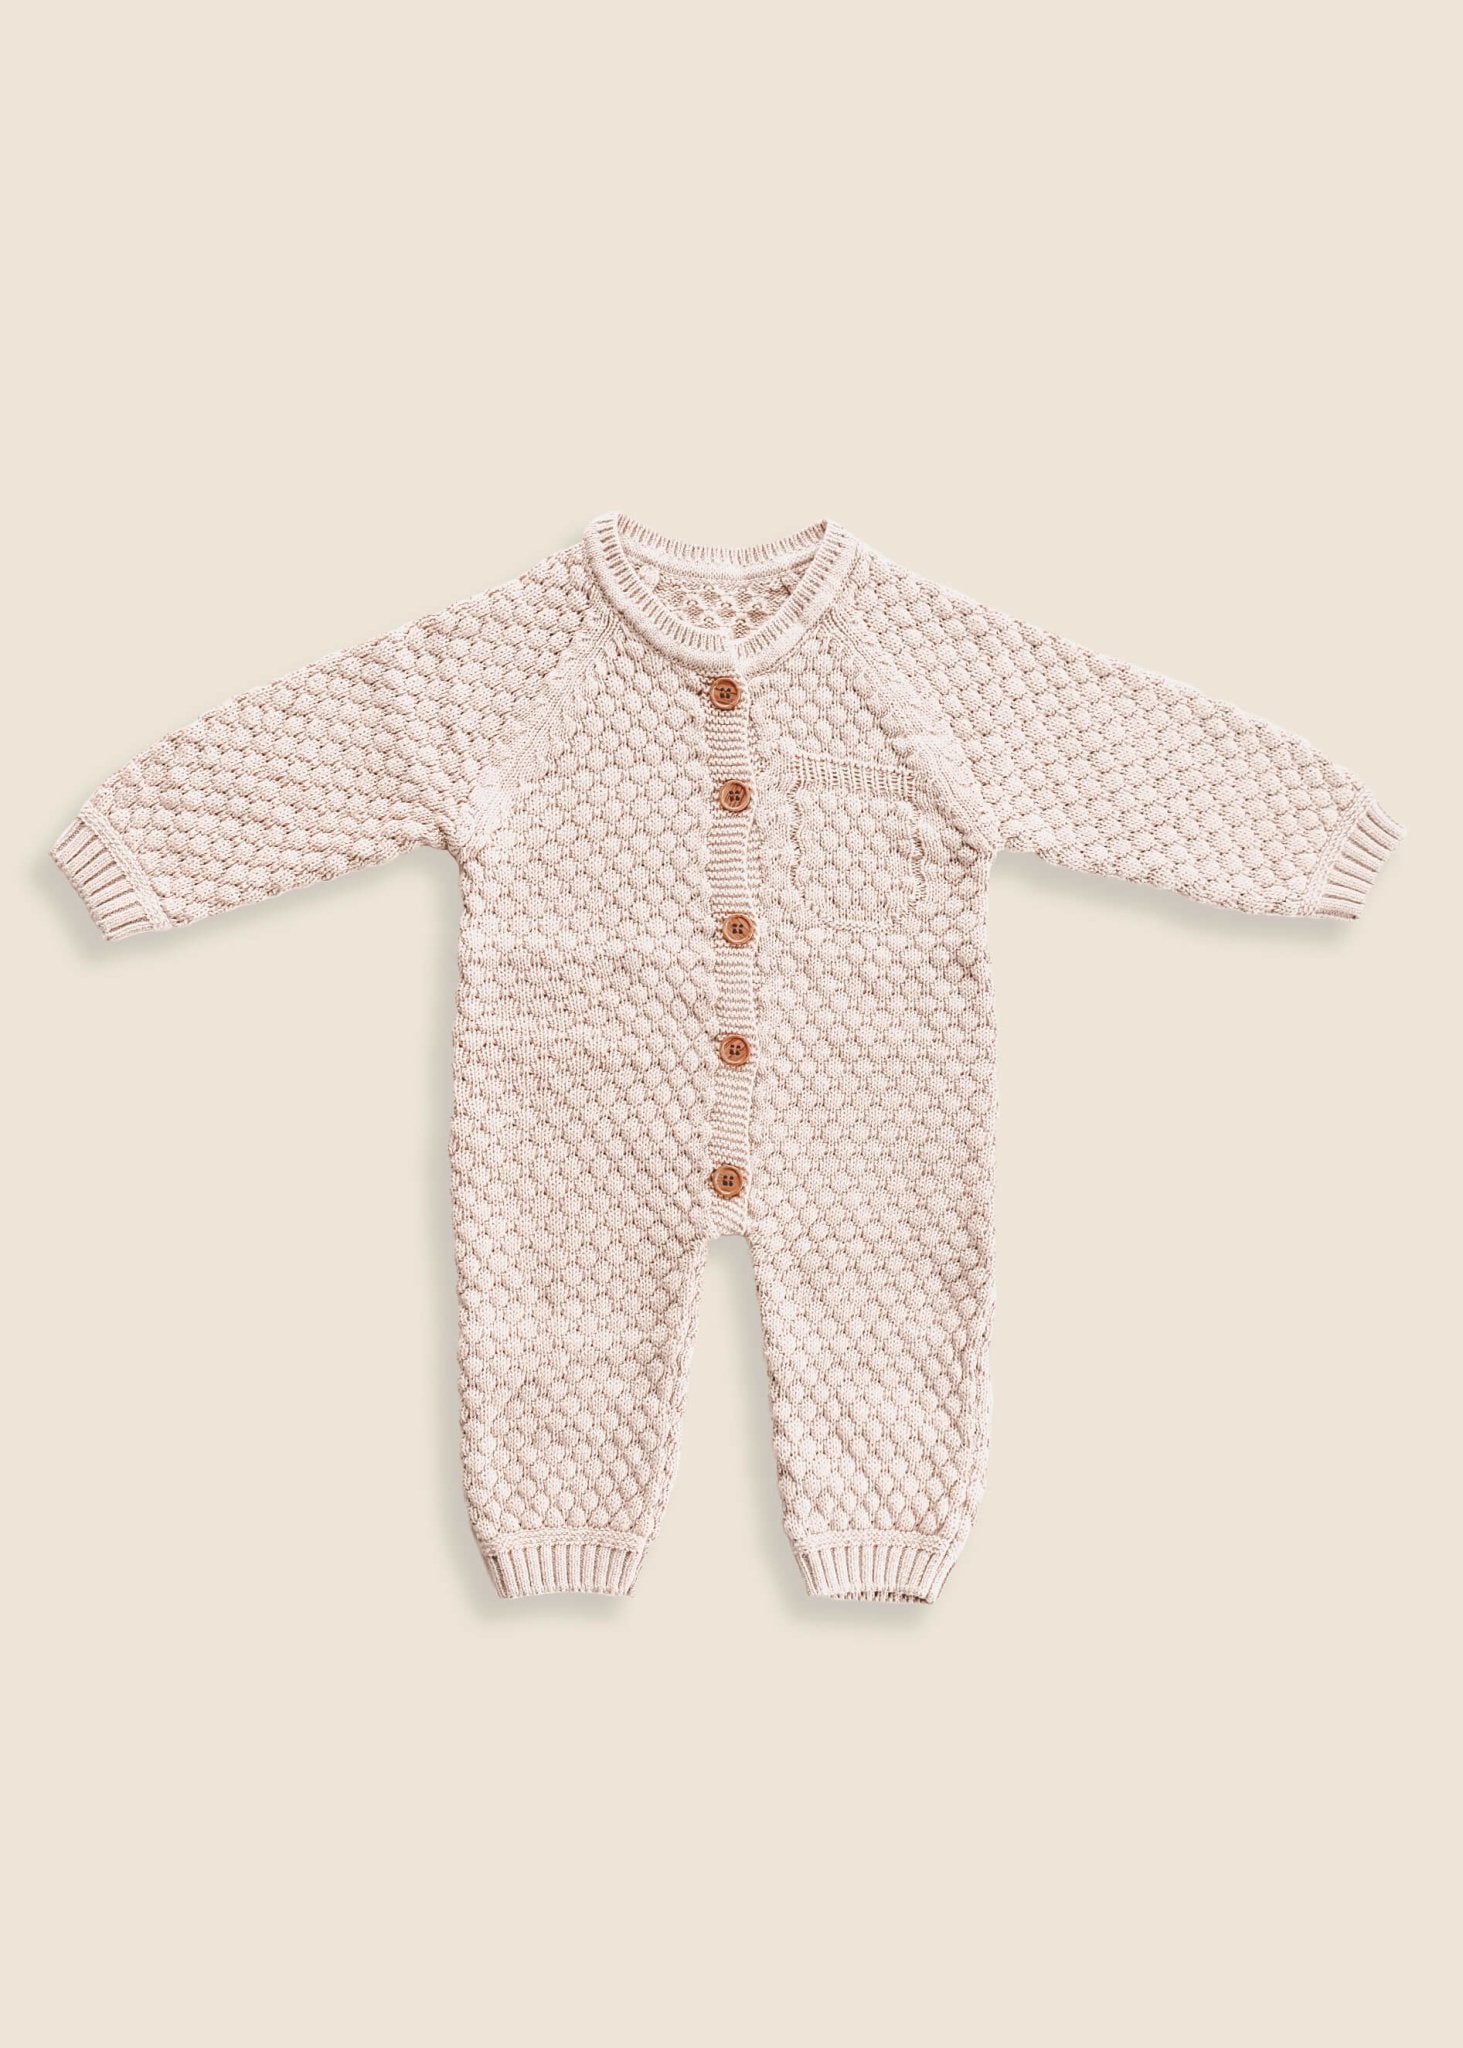 JUDE Knitted Button-Up Romper + Bonnet - Biscuit - Rocco & The Fox brown neutral baby toddler newborn knit romper and bonnet set matching beige neutral unisex gender neutral